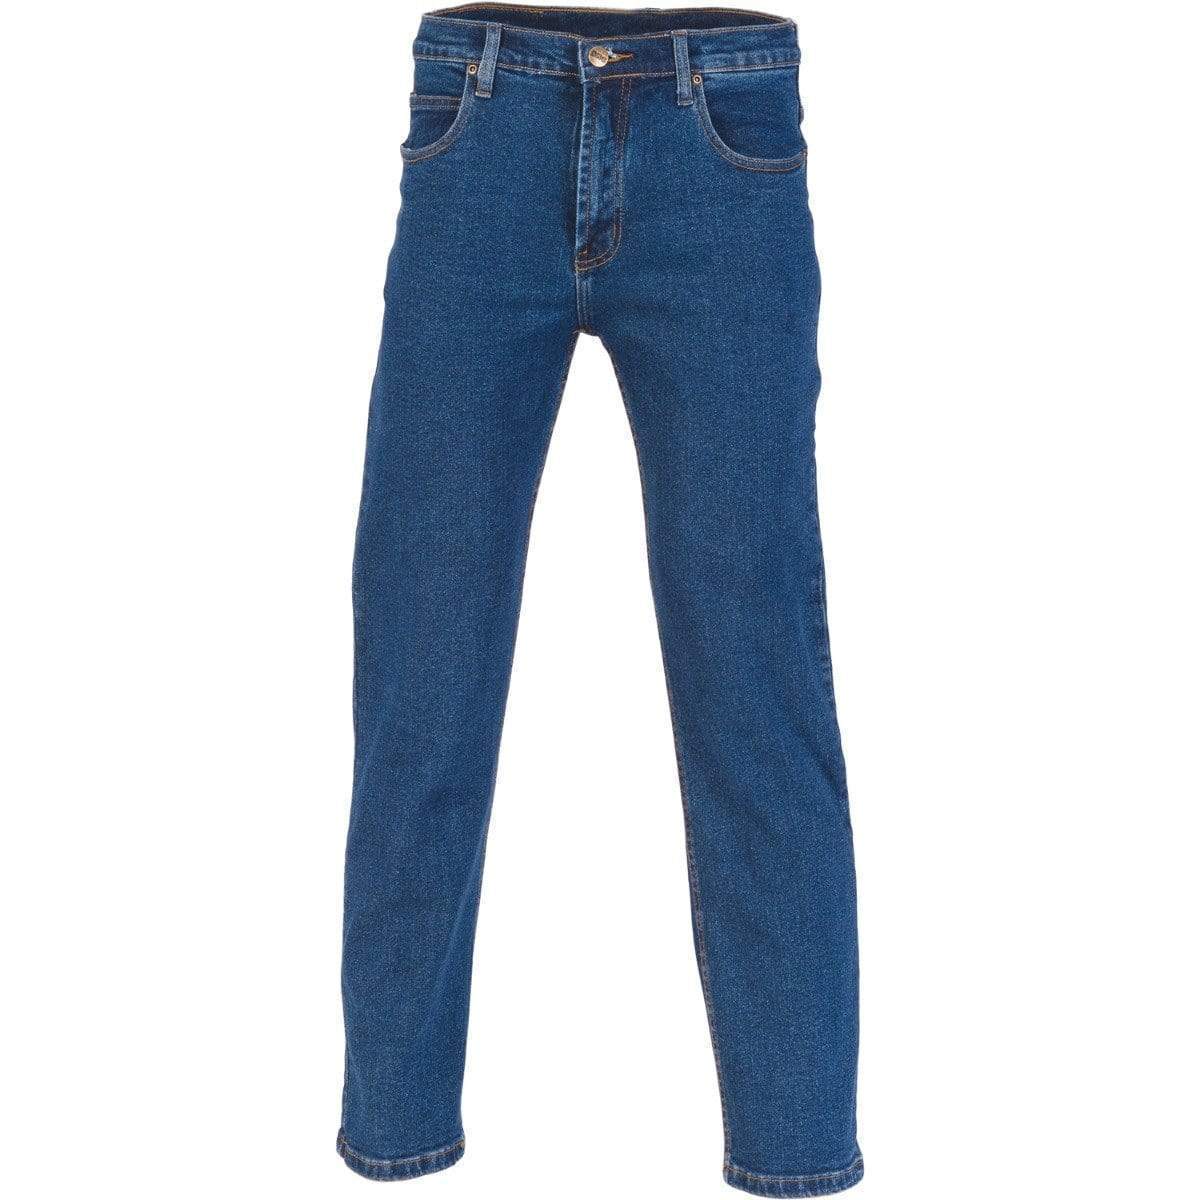 Dnc Workwear Cotton Denim Jeans - 3317 Work Wear DNC Workwear Blue 72R 